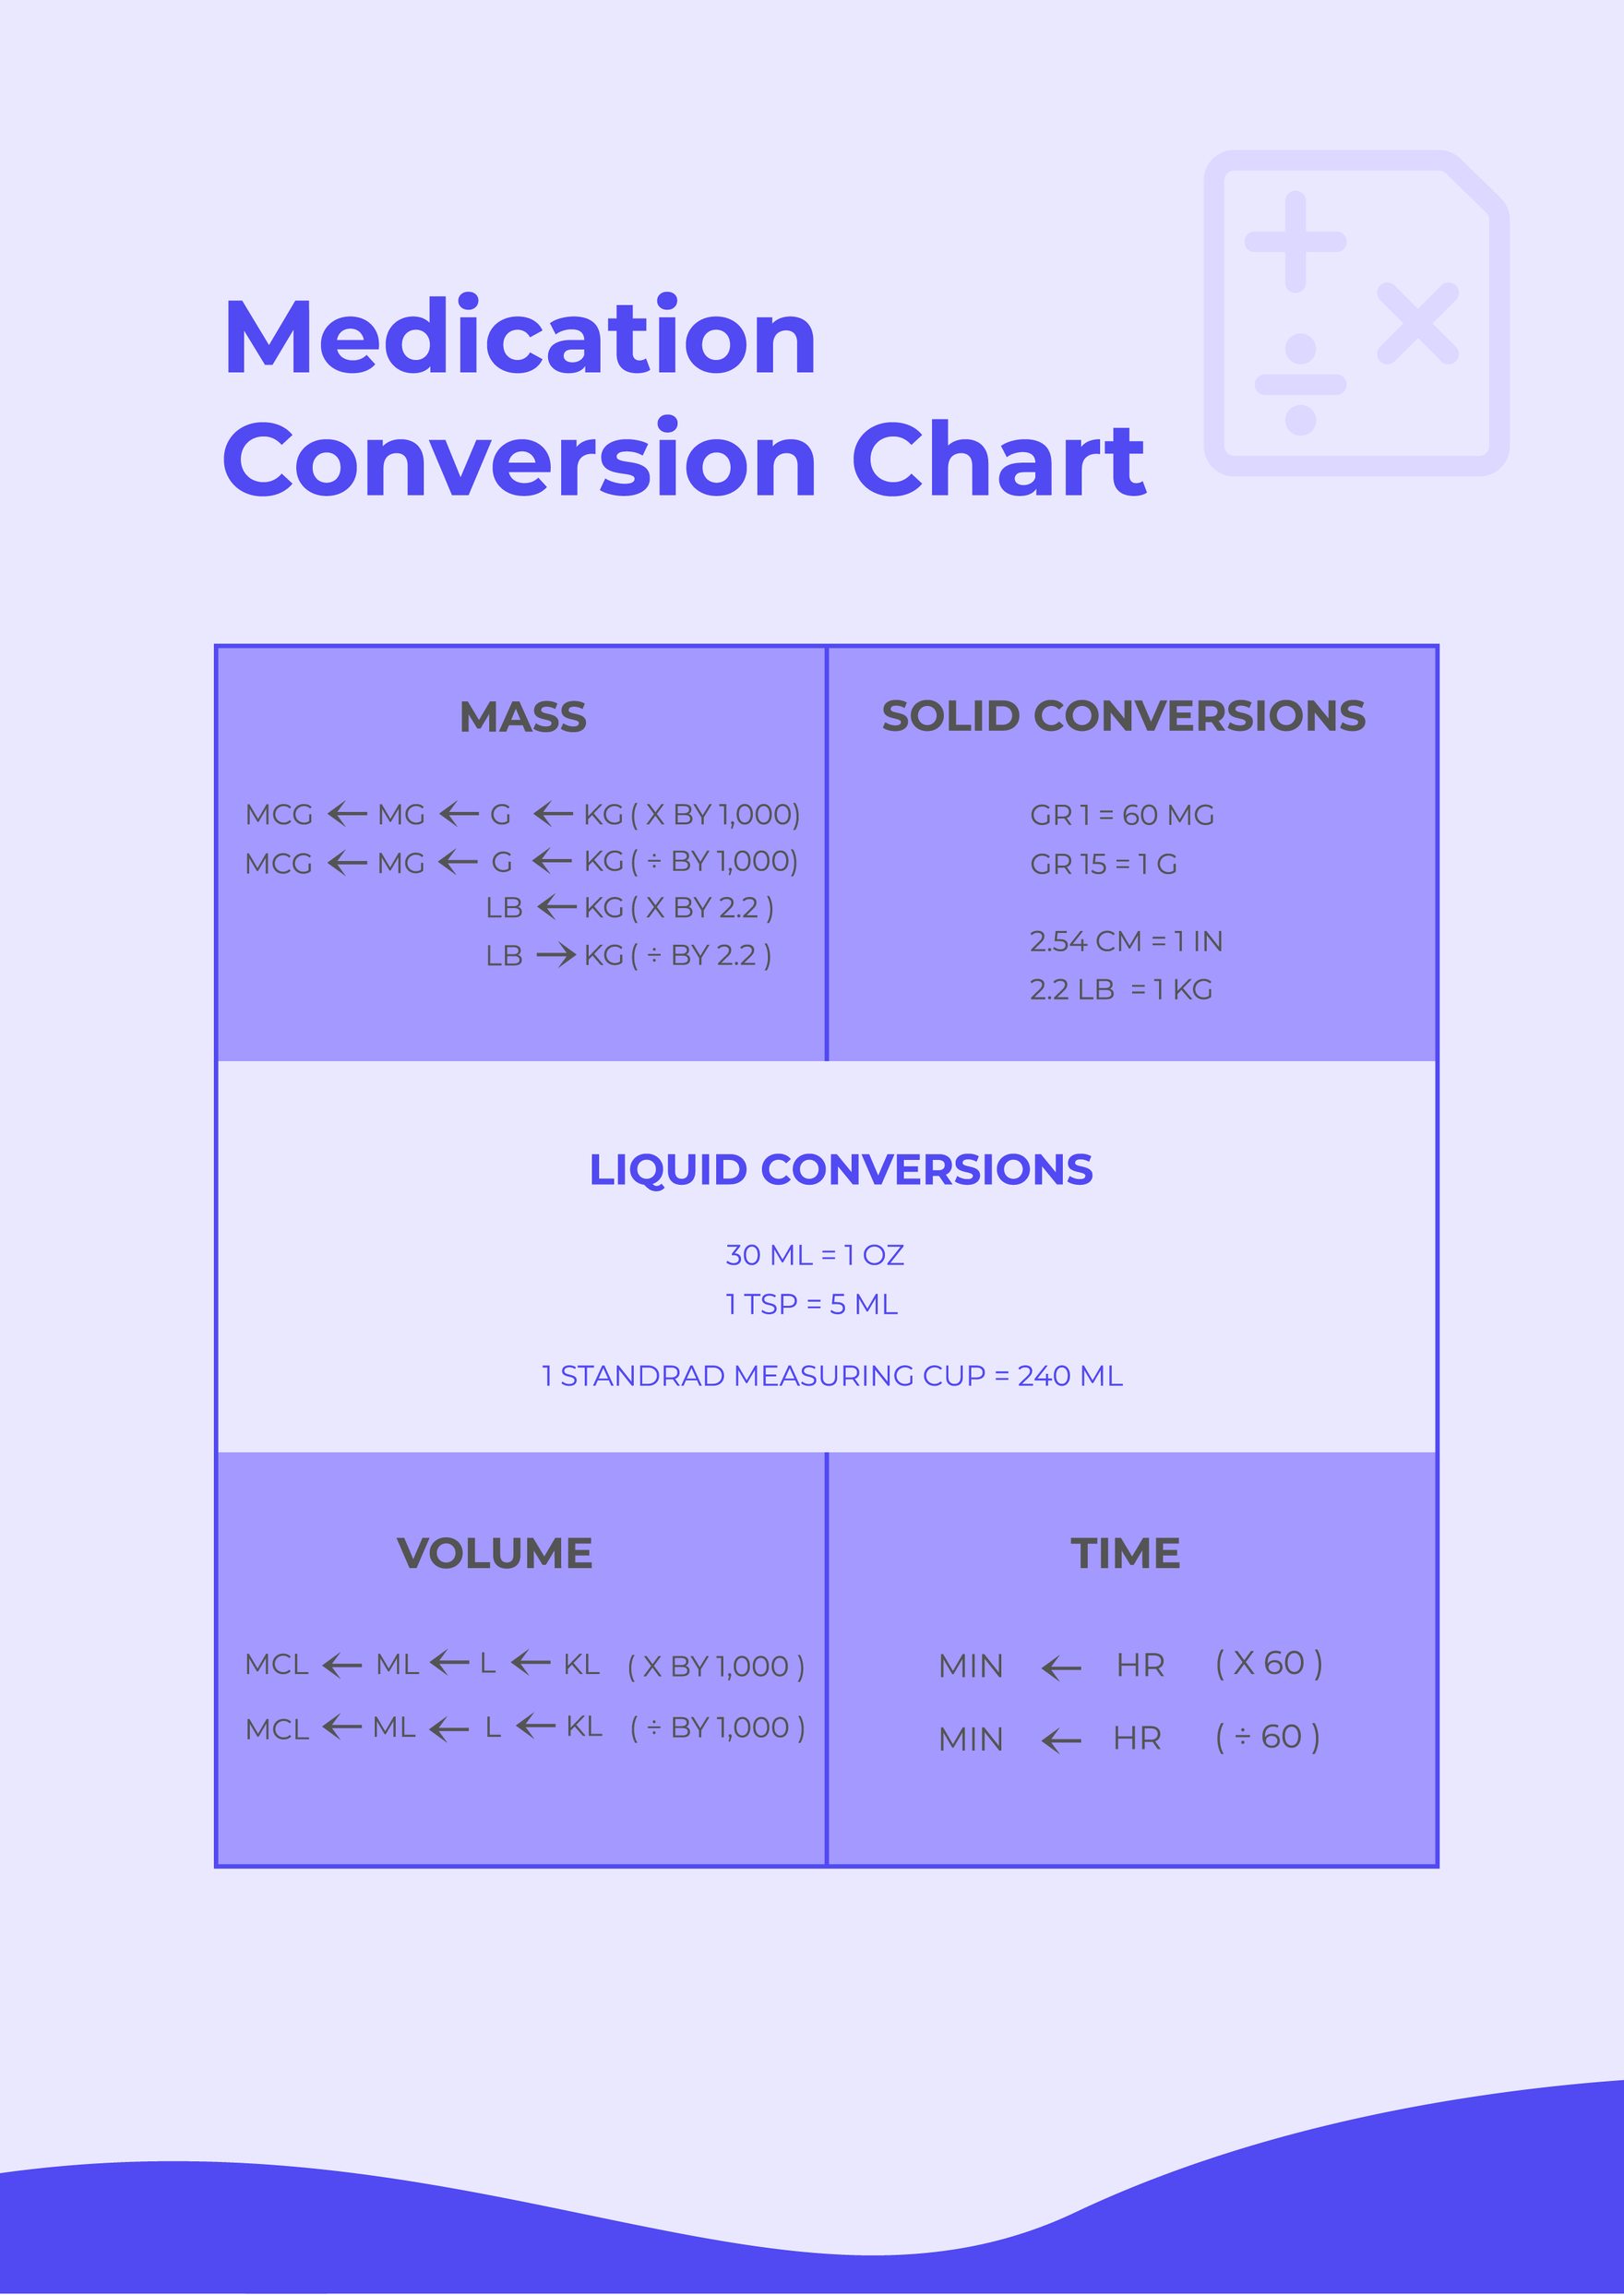 Medication Conversion Chart in PDF, Illustrator